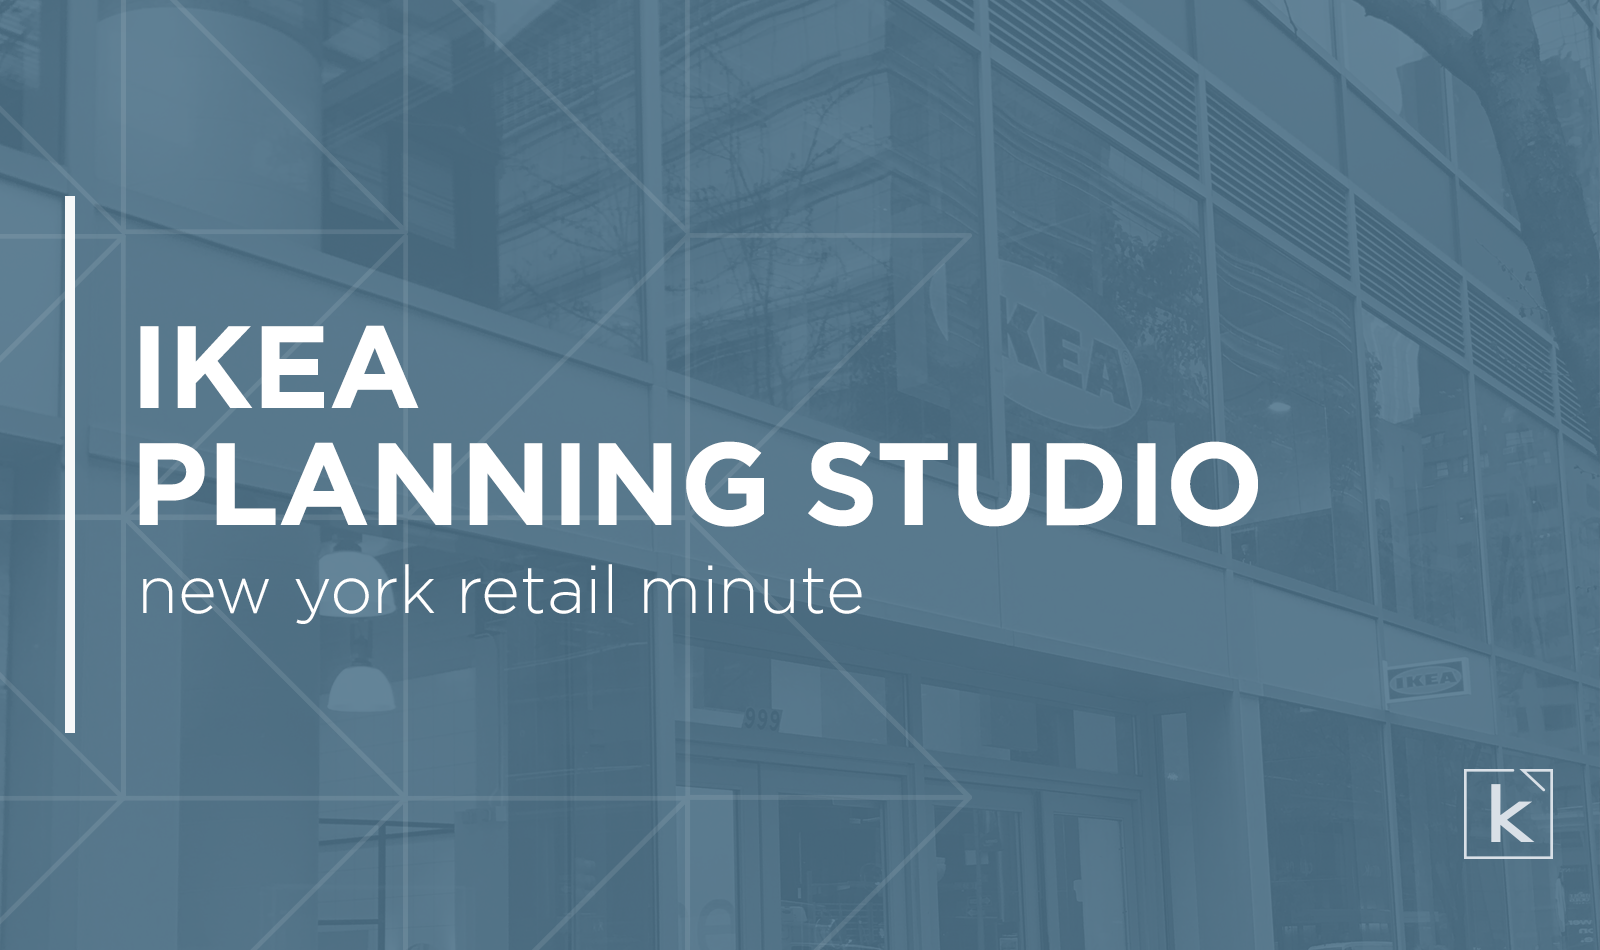 ikea-planning-studio-storefront